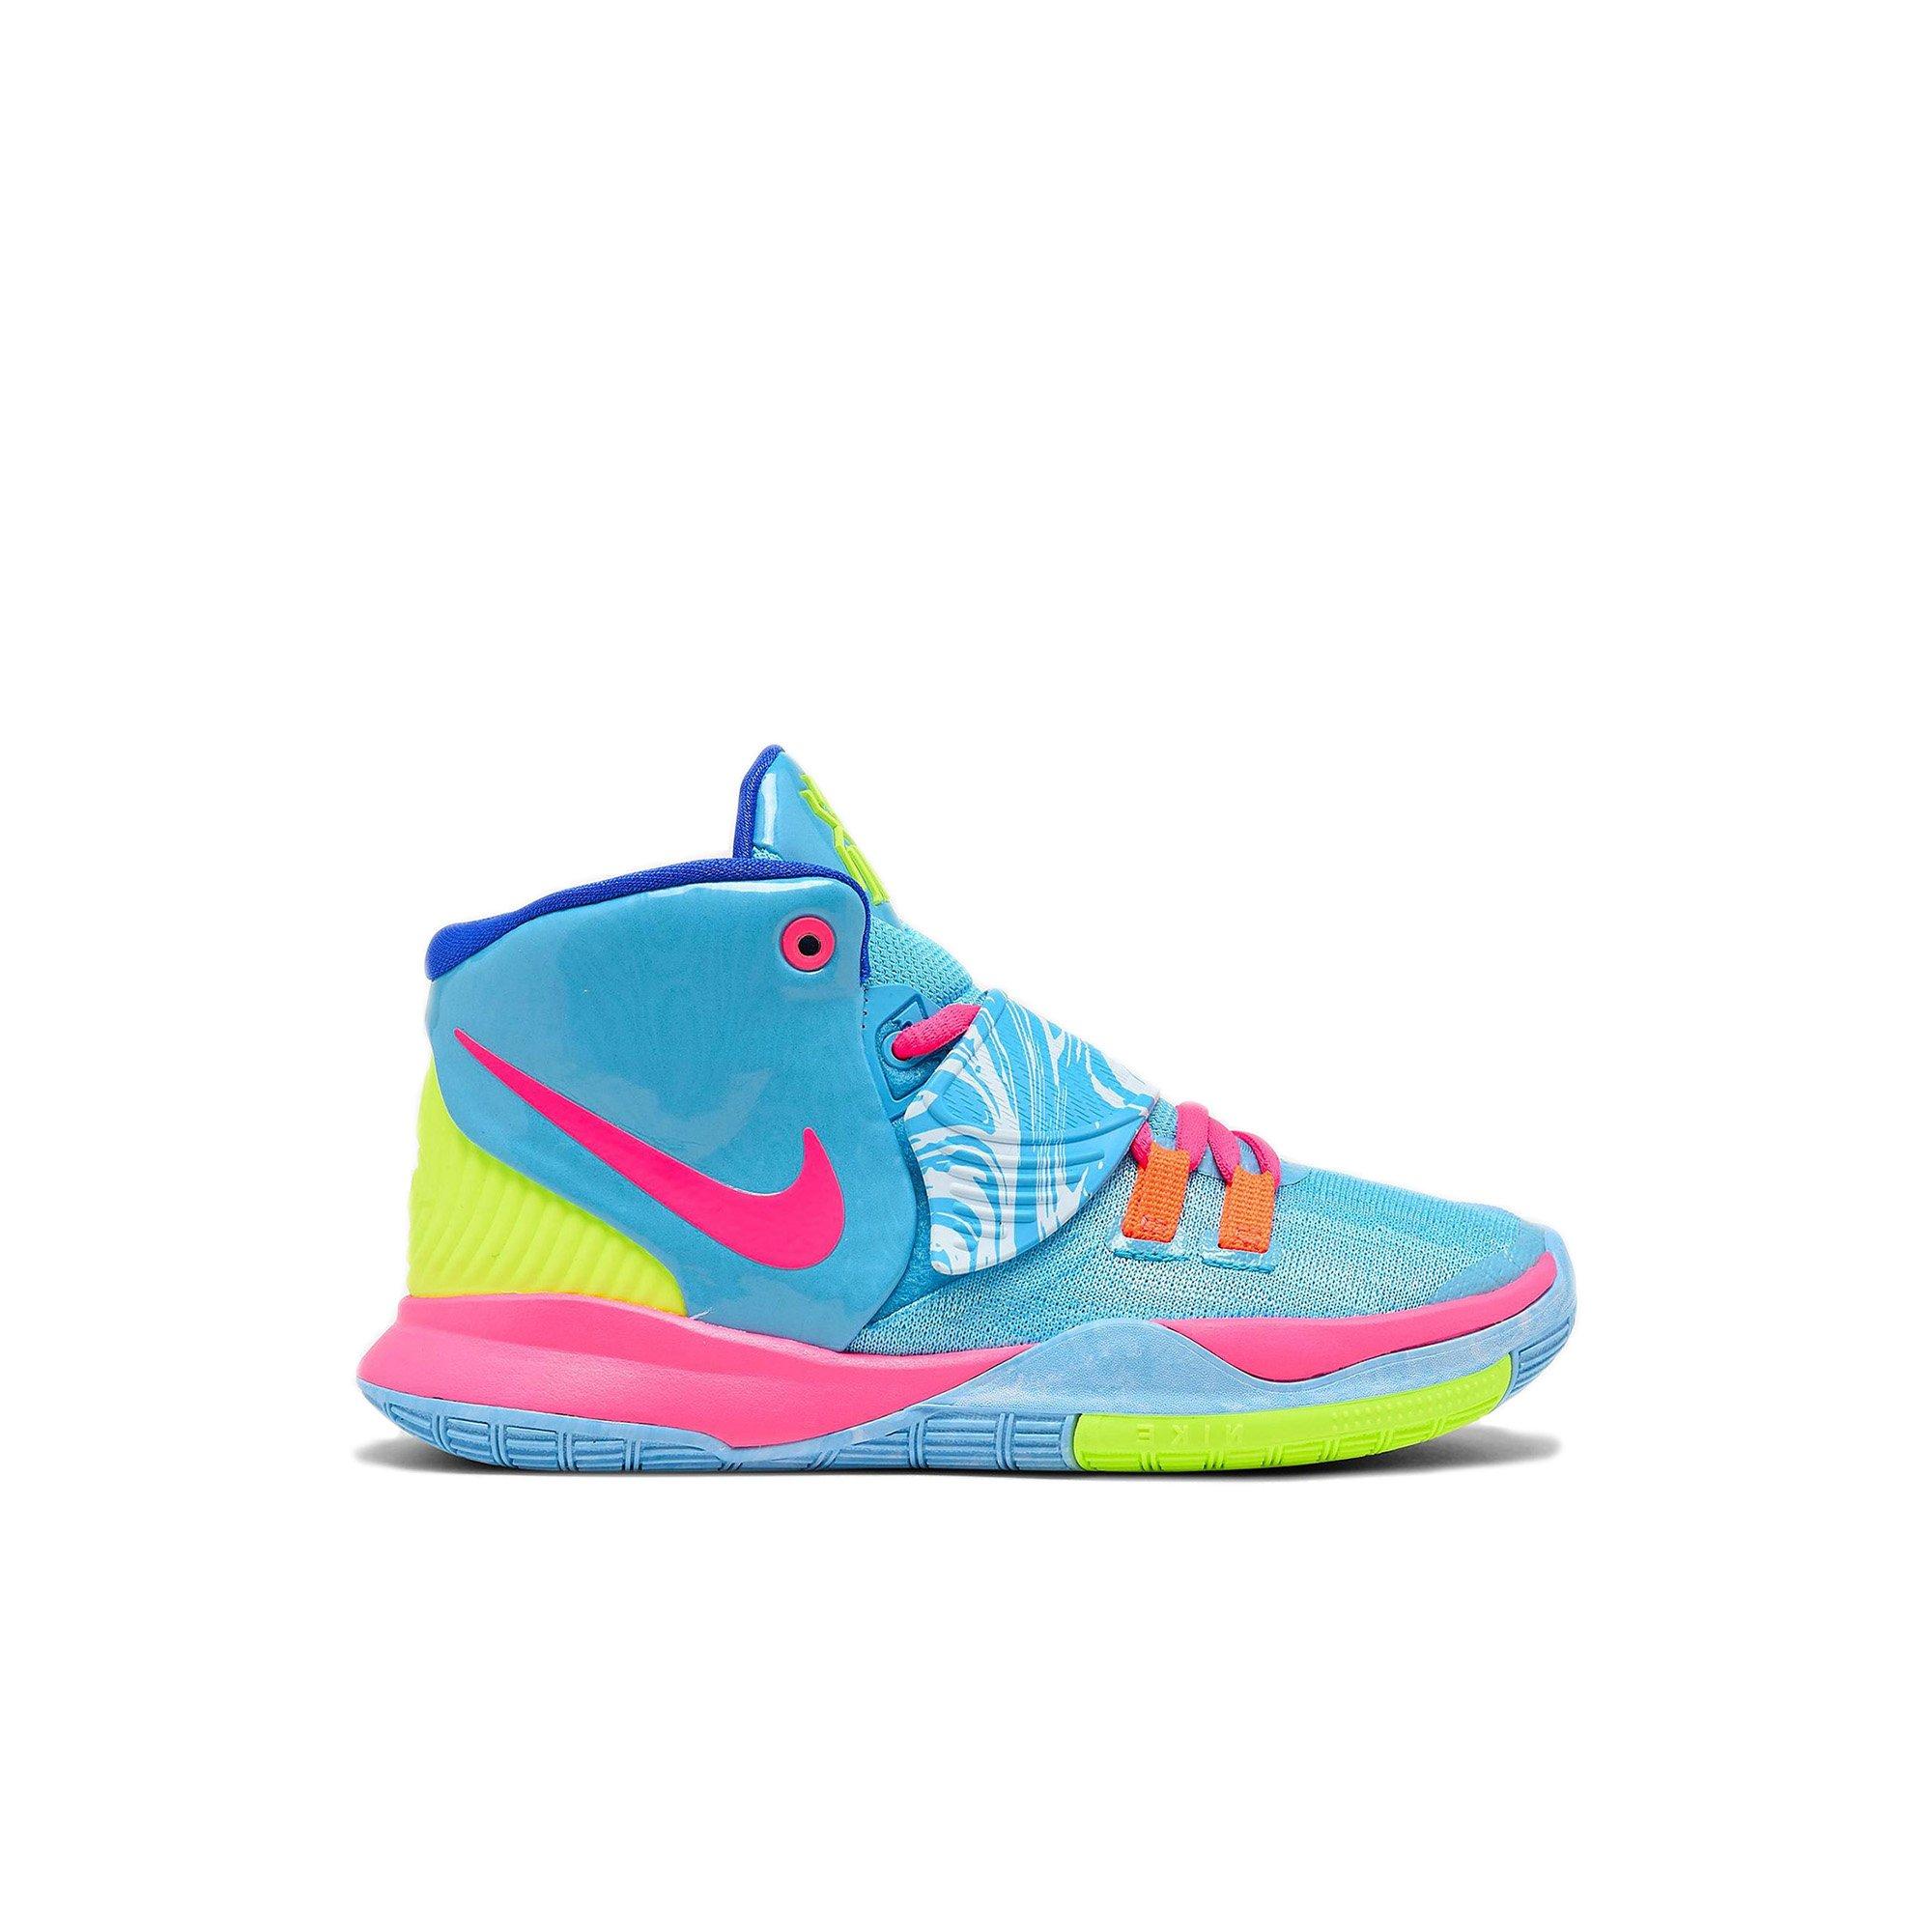 Jual Restock Sepatu Basket Nike Kyrie 5 Spongebob Edition